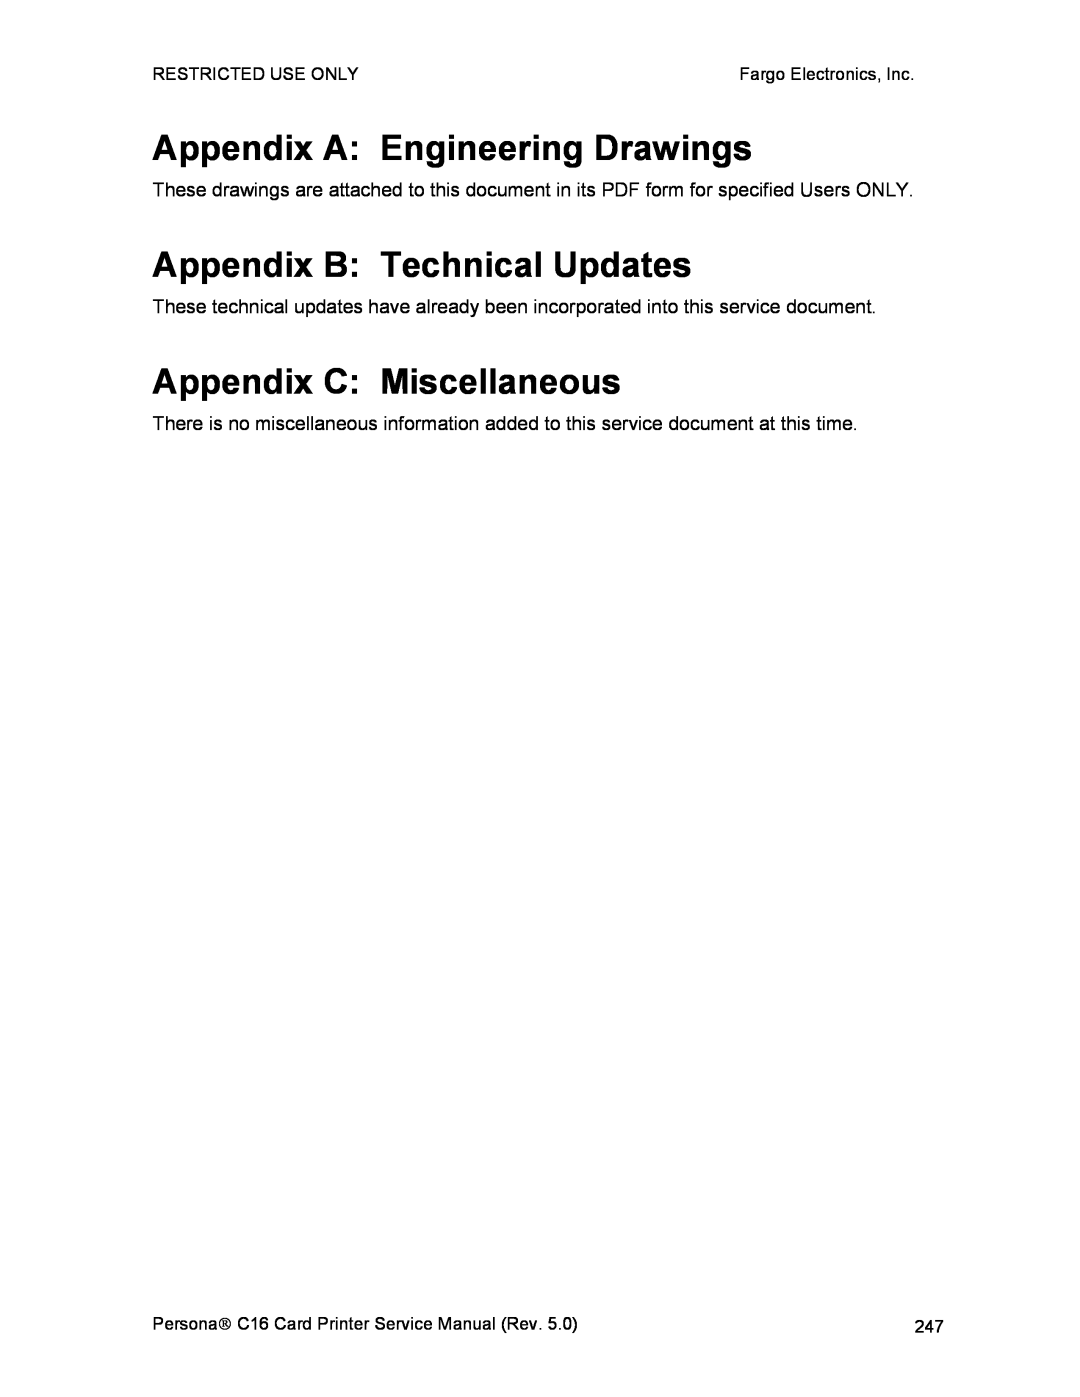 FARGO electronic C16 service manual Appendix A Engineering Drawings, Appendix B Technical Updates, Appendix C Miscellaneous 